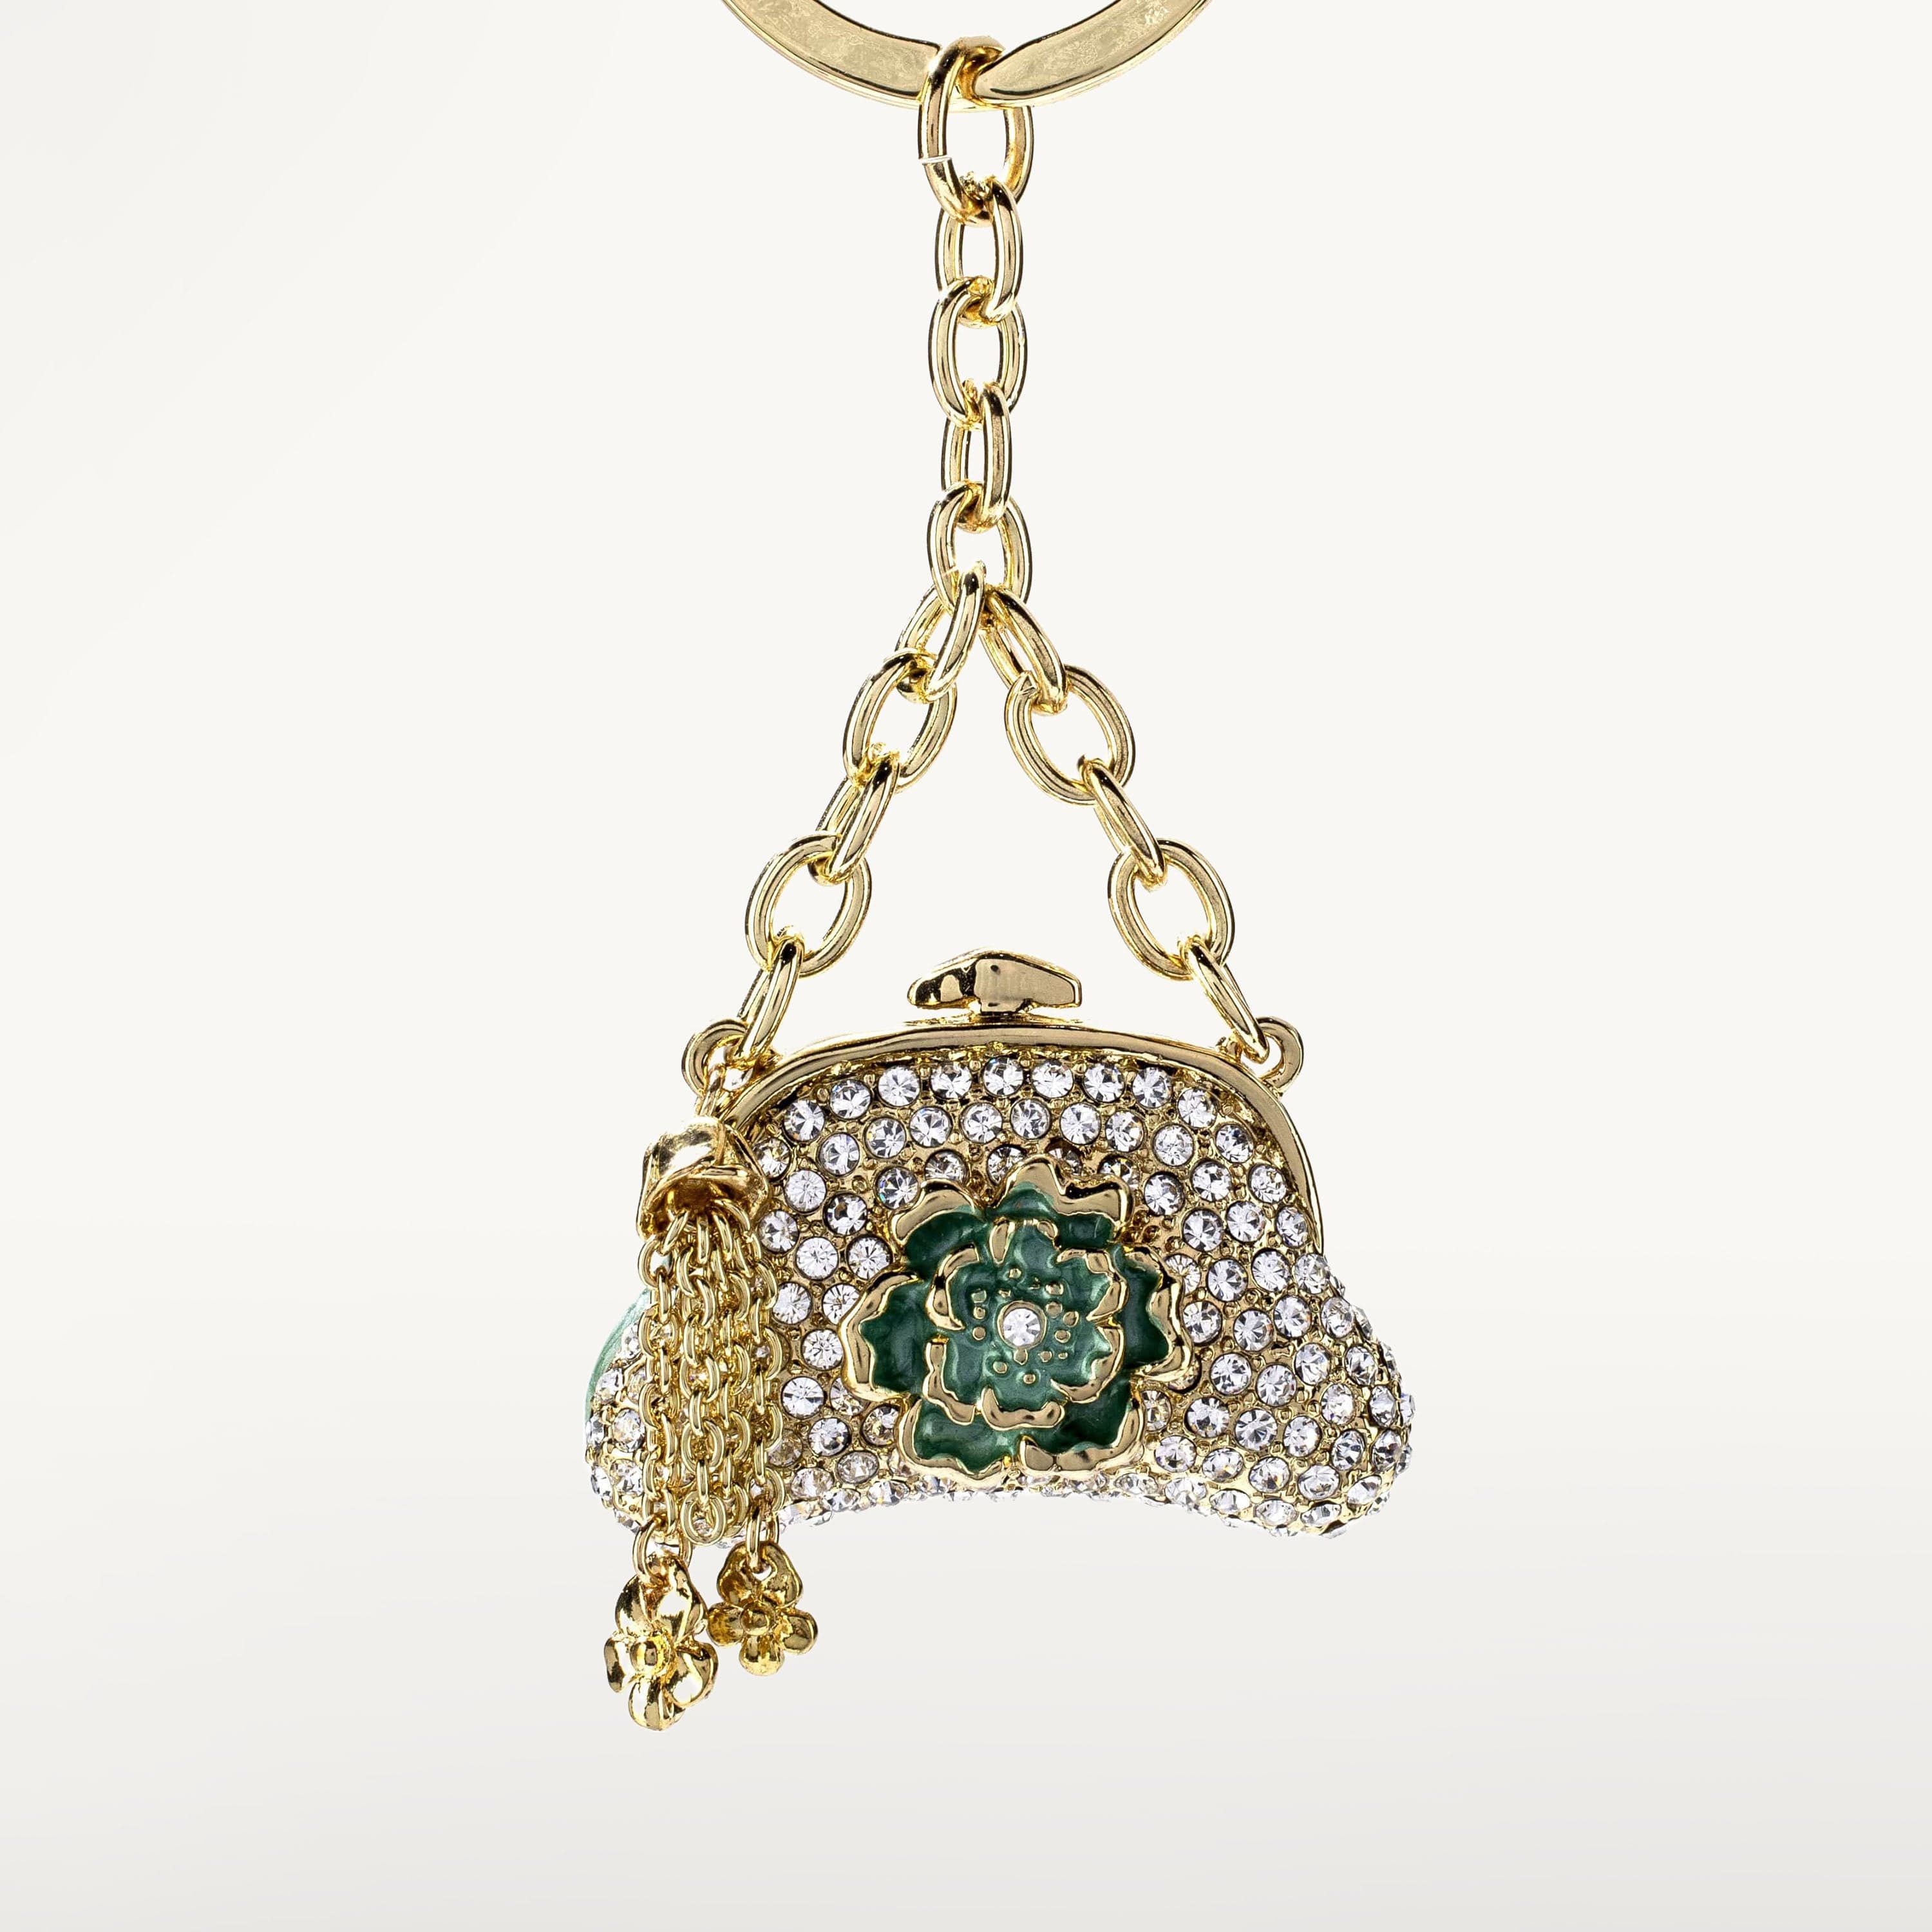 Kalifano Crystal Keychains Gold Purse Keychain made with Swarovski Crystals SKC-074